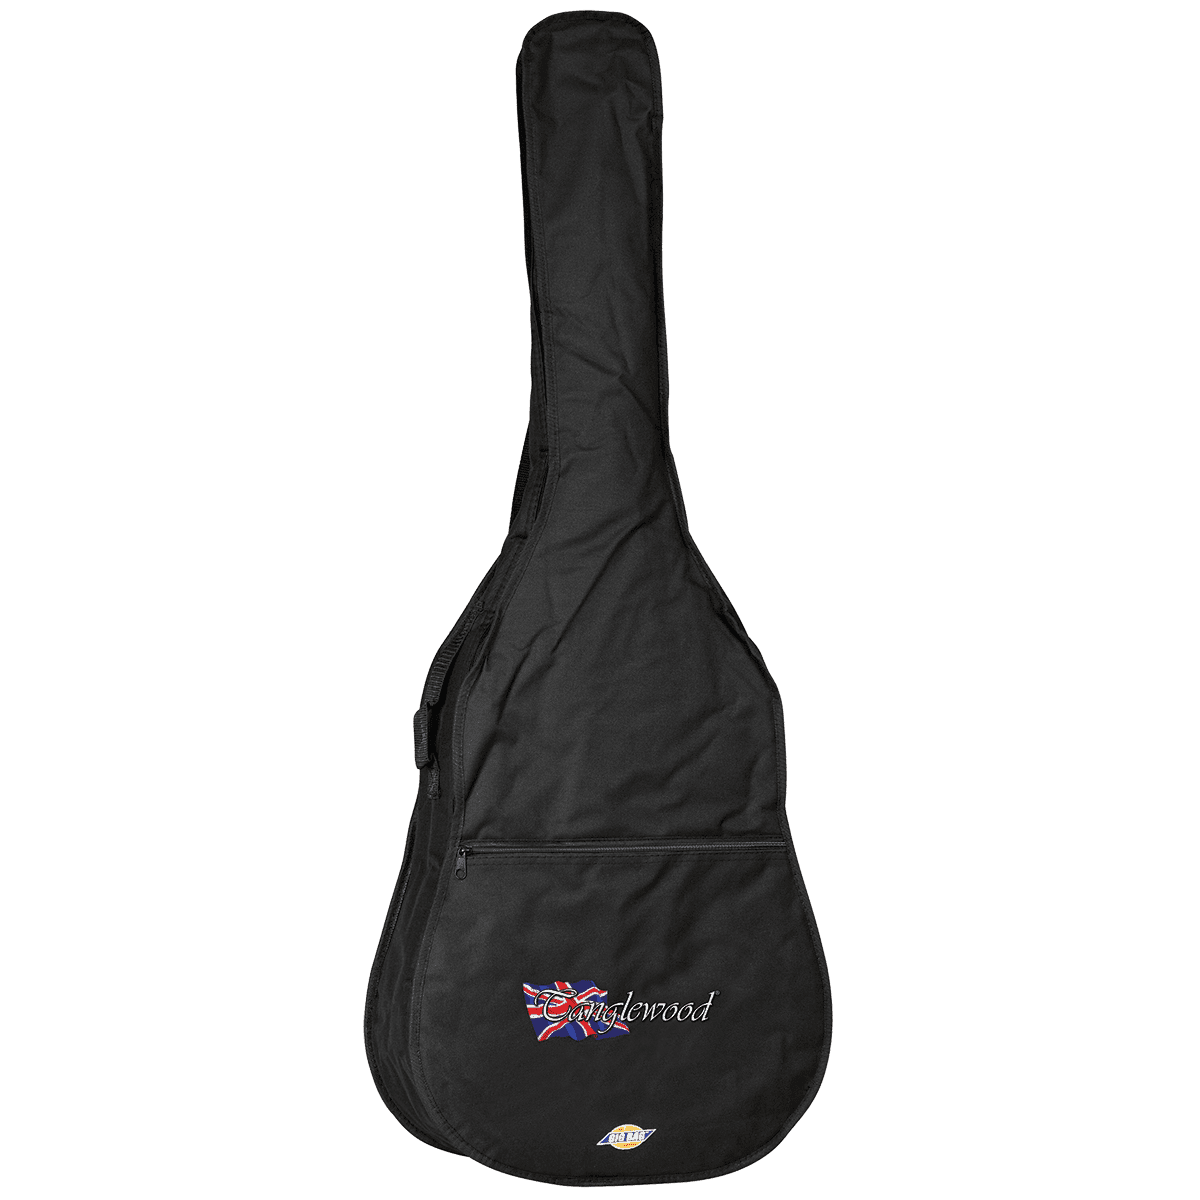 TWBRITBAGD Tanglewood Guitar Bag Suit Dreadnought/Orchestra Guitars